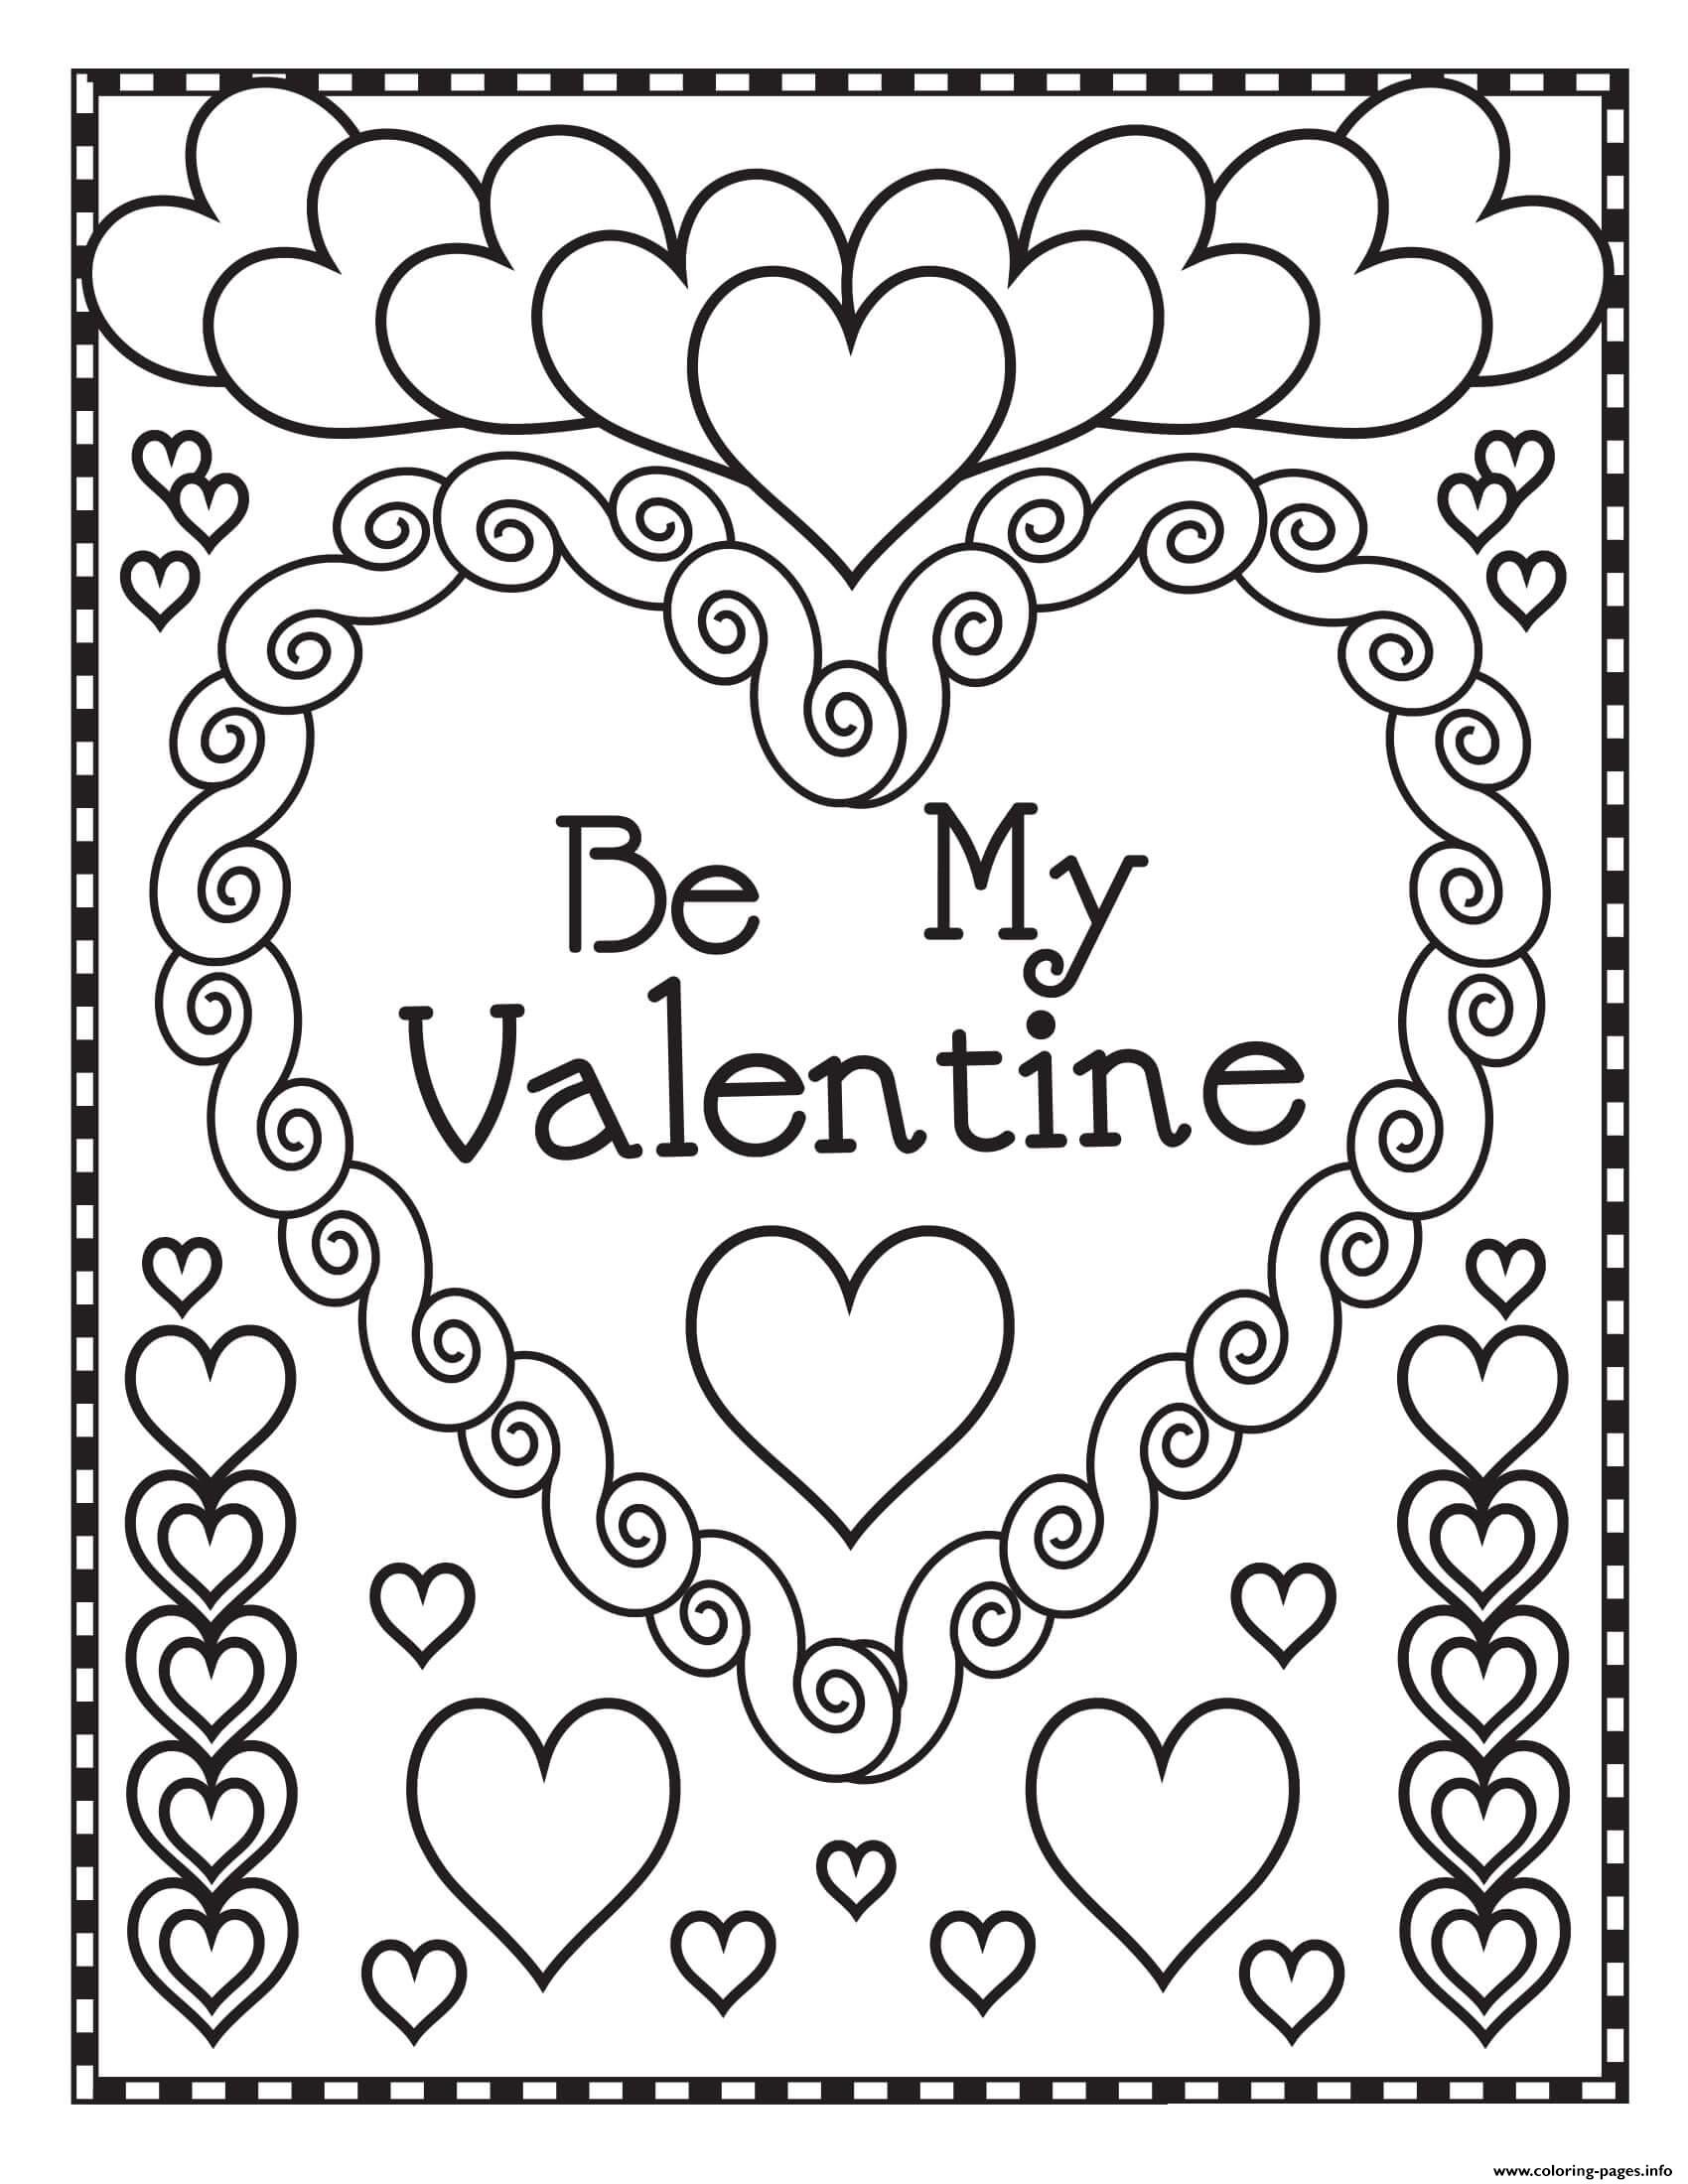 Mandala Heart Be My Valentine coloring